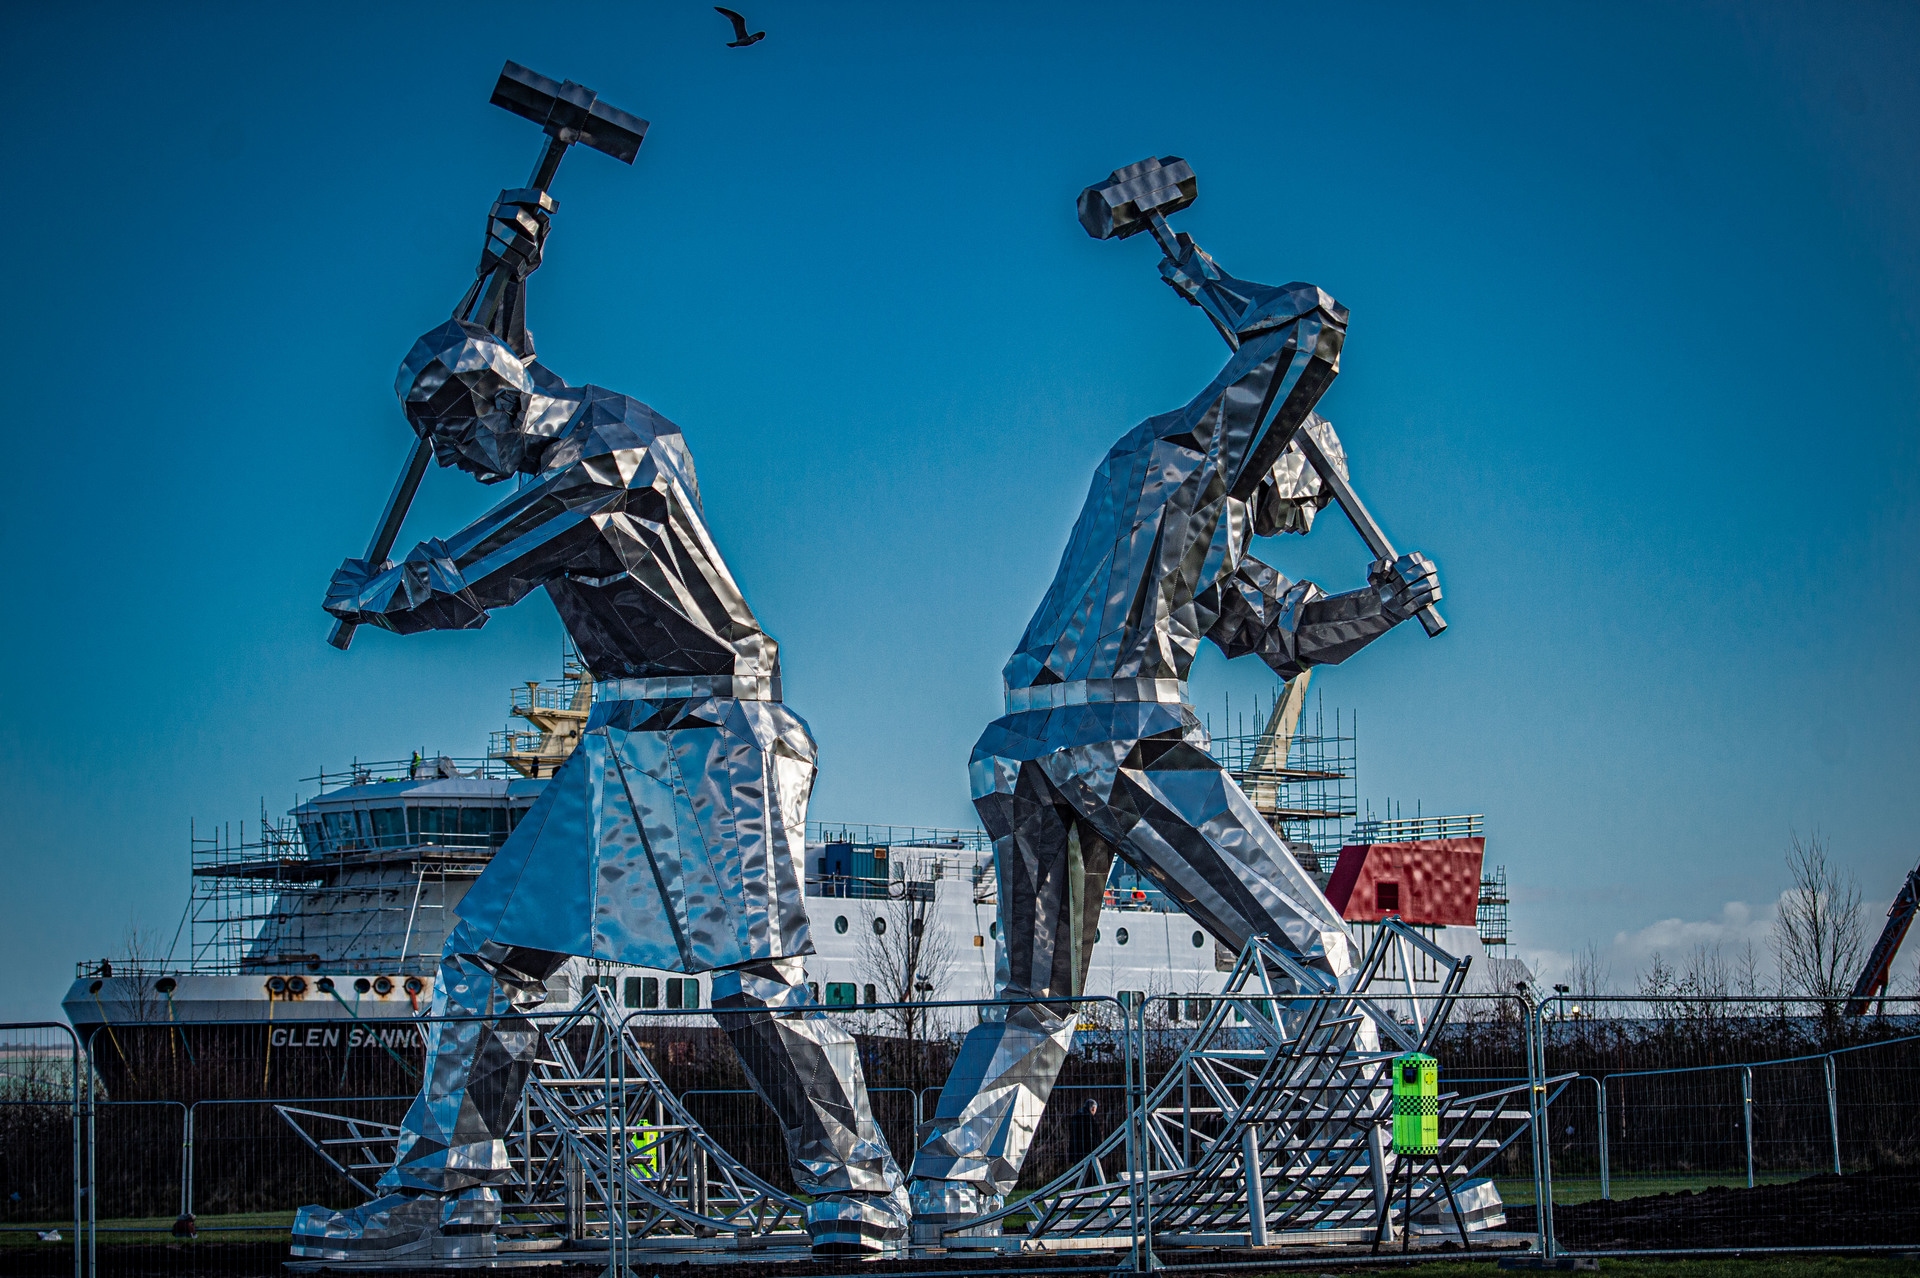 The 'Shipbuilder of Port Glasgow’ stainless steel figures in Port Glasgow's Coronation Park.